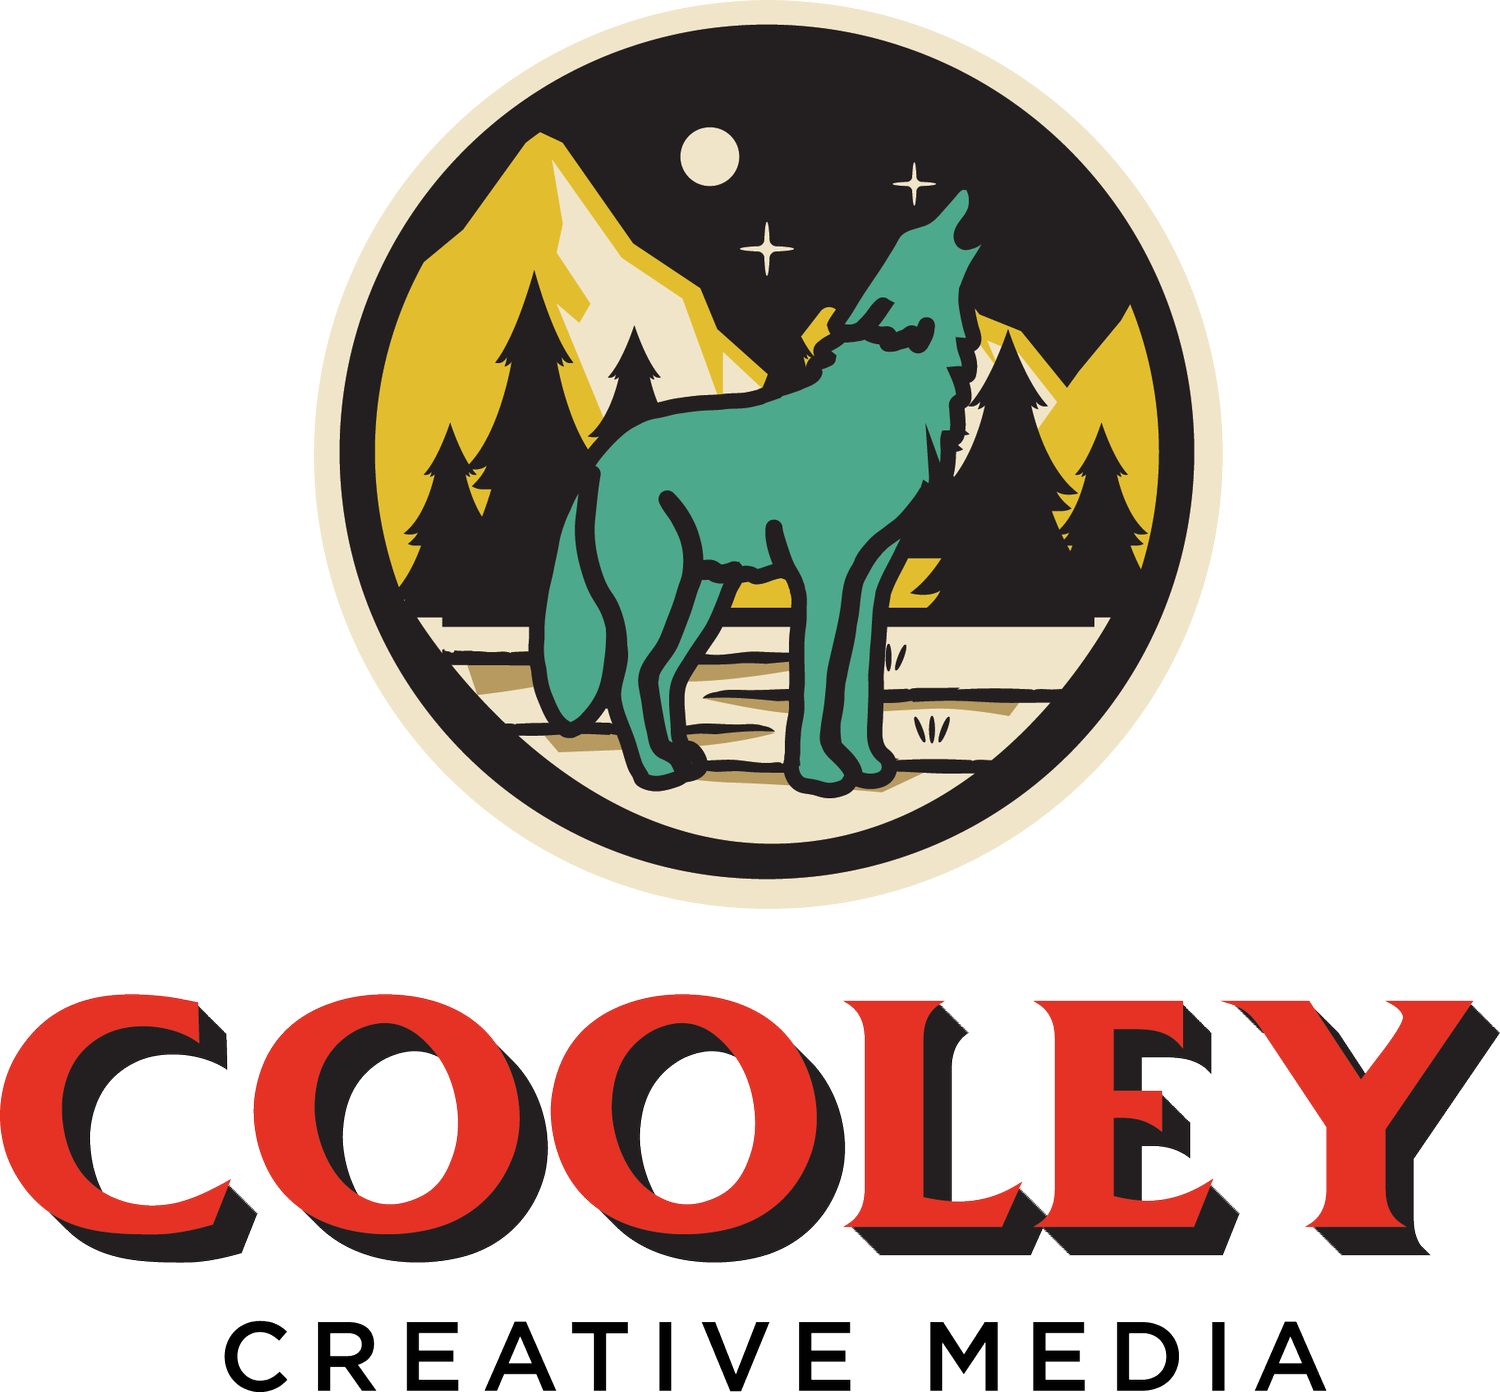 Cooley Creative Media